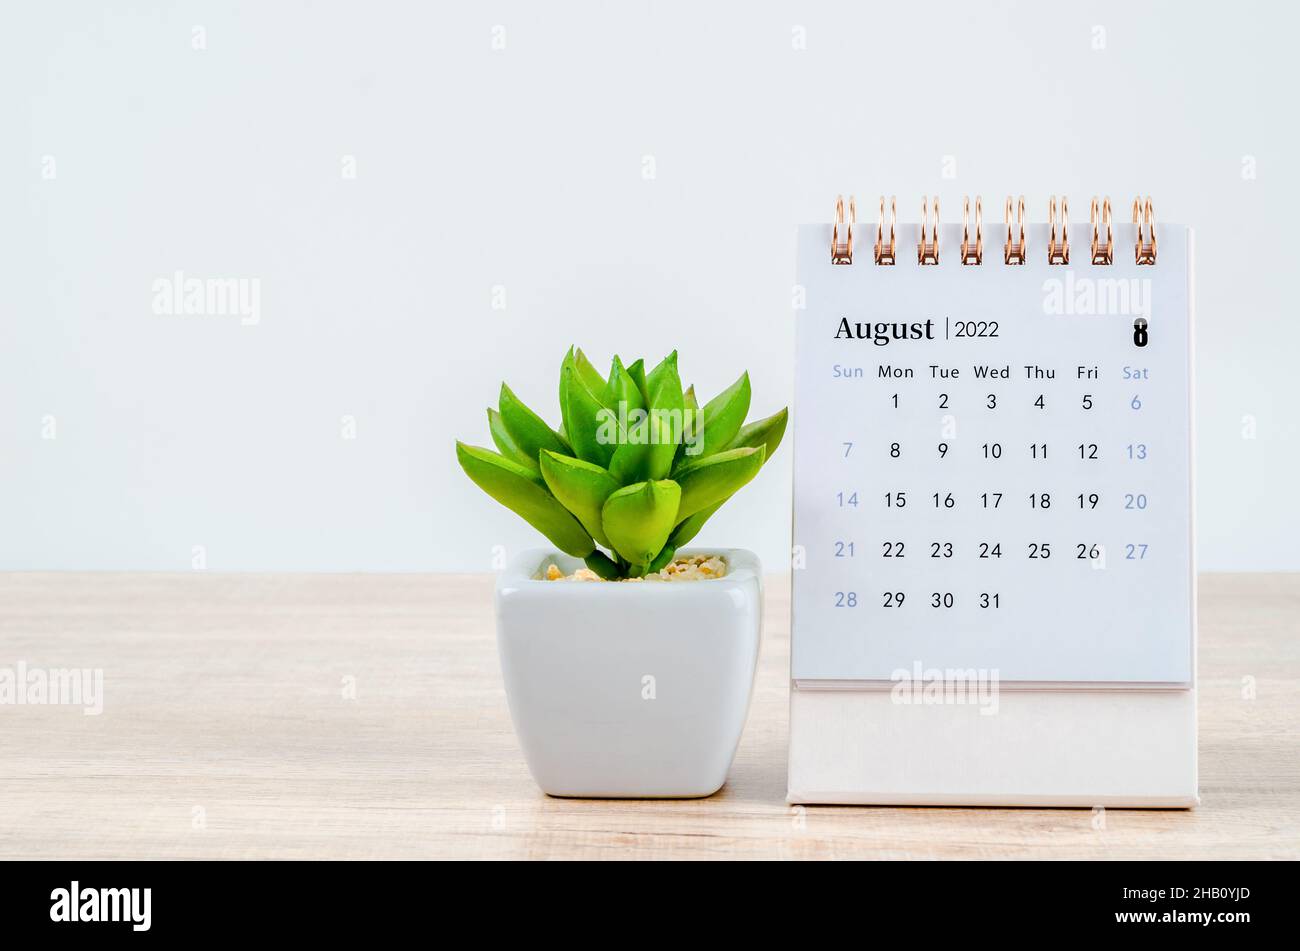 Free August 2022 Calendar Wallpapers  Desktop  Mobile